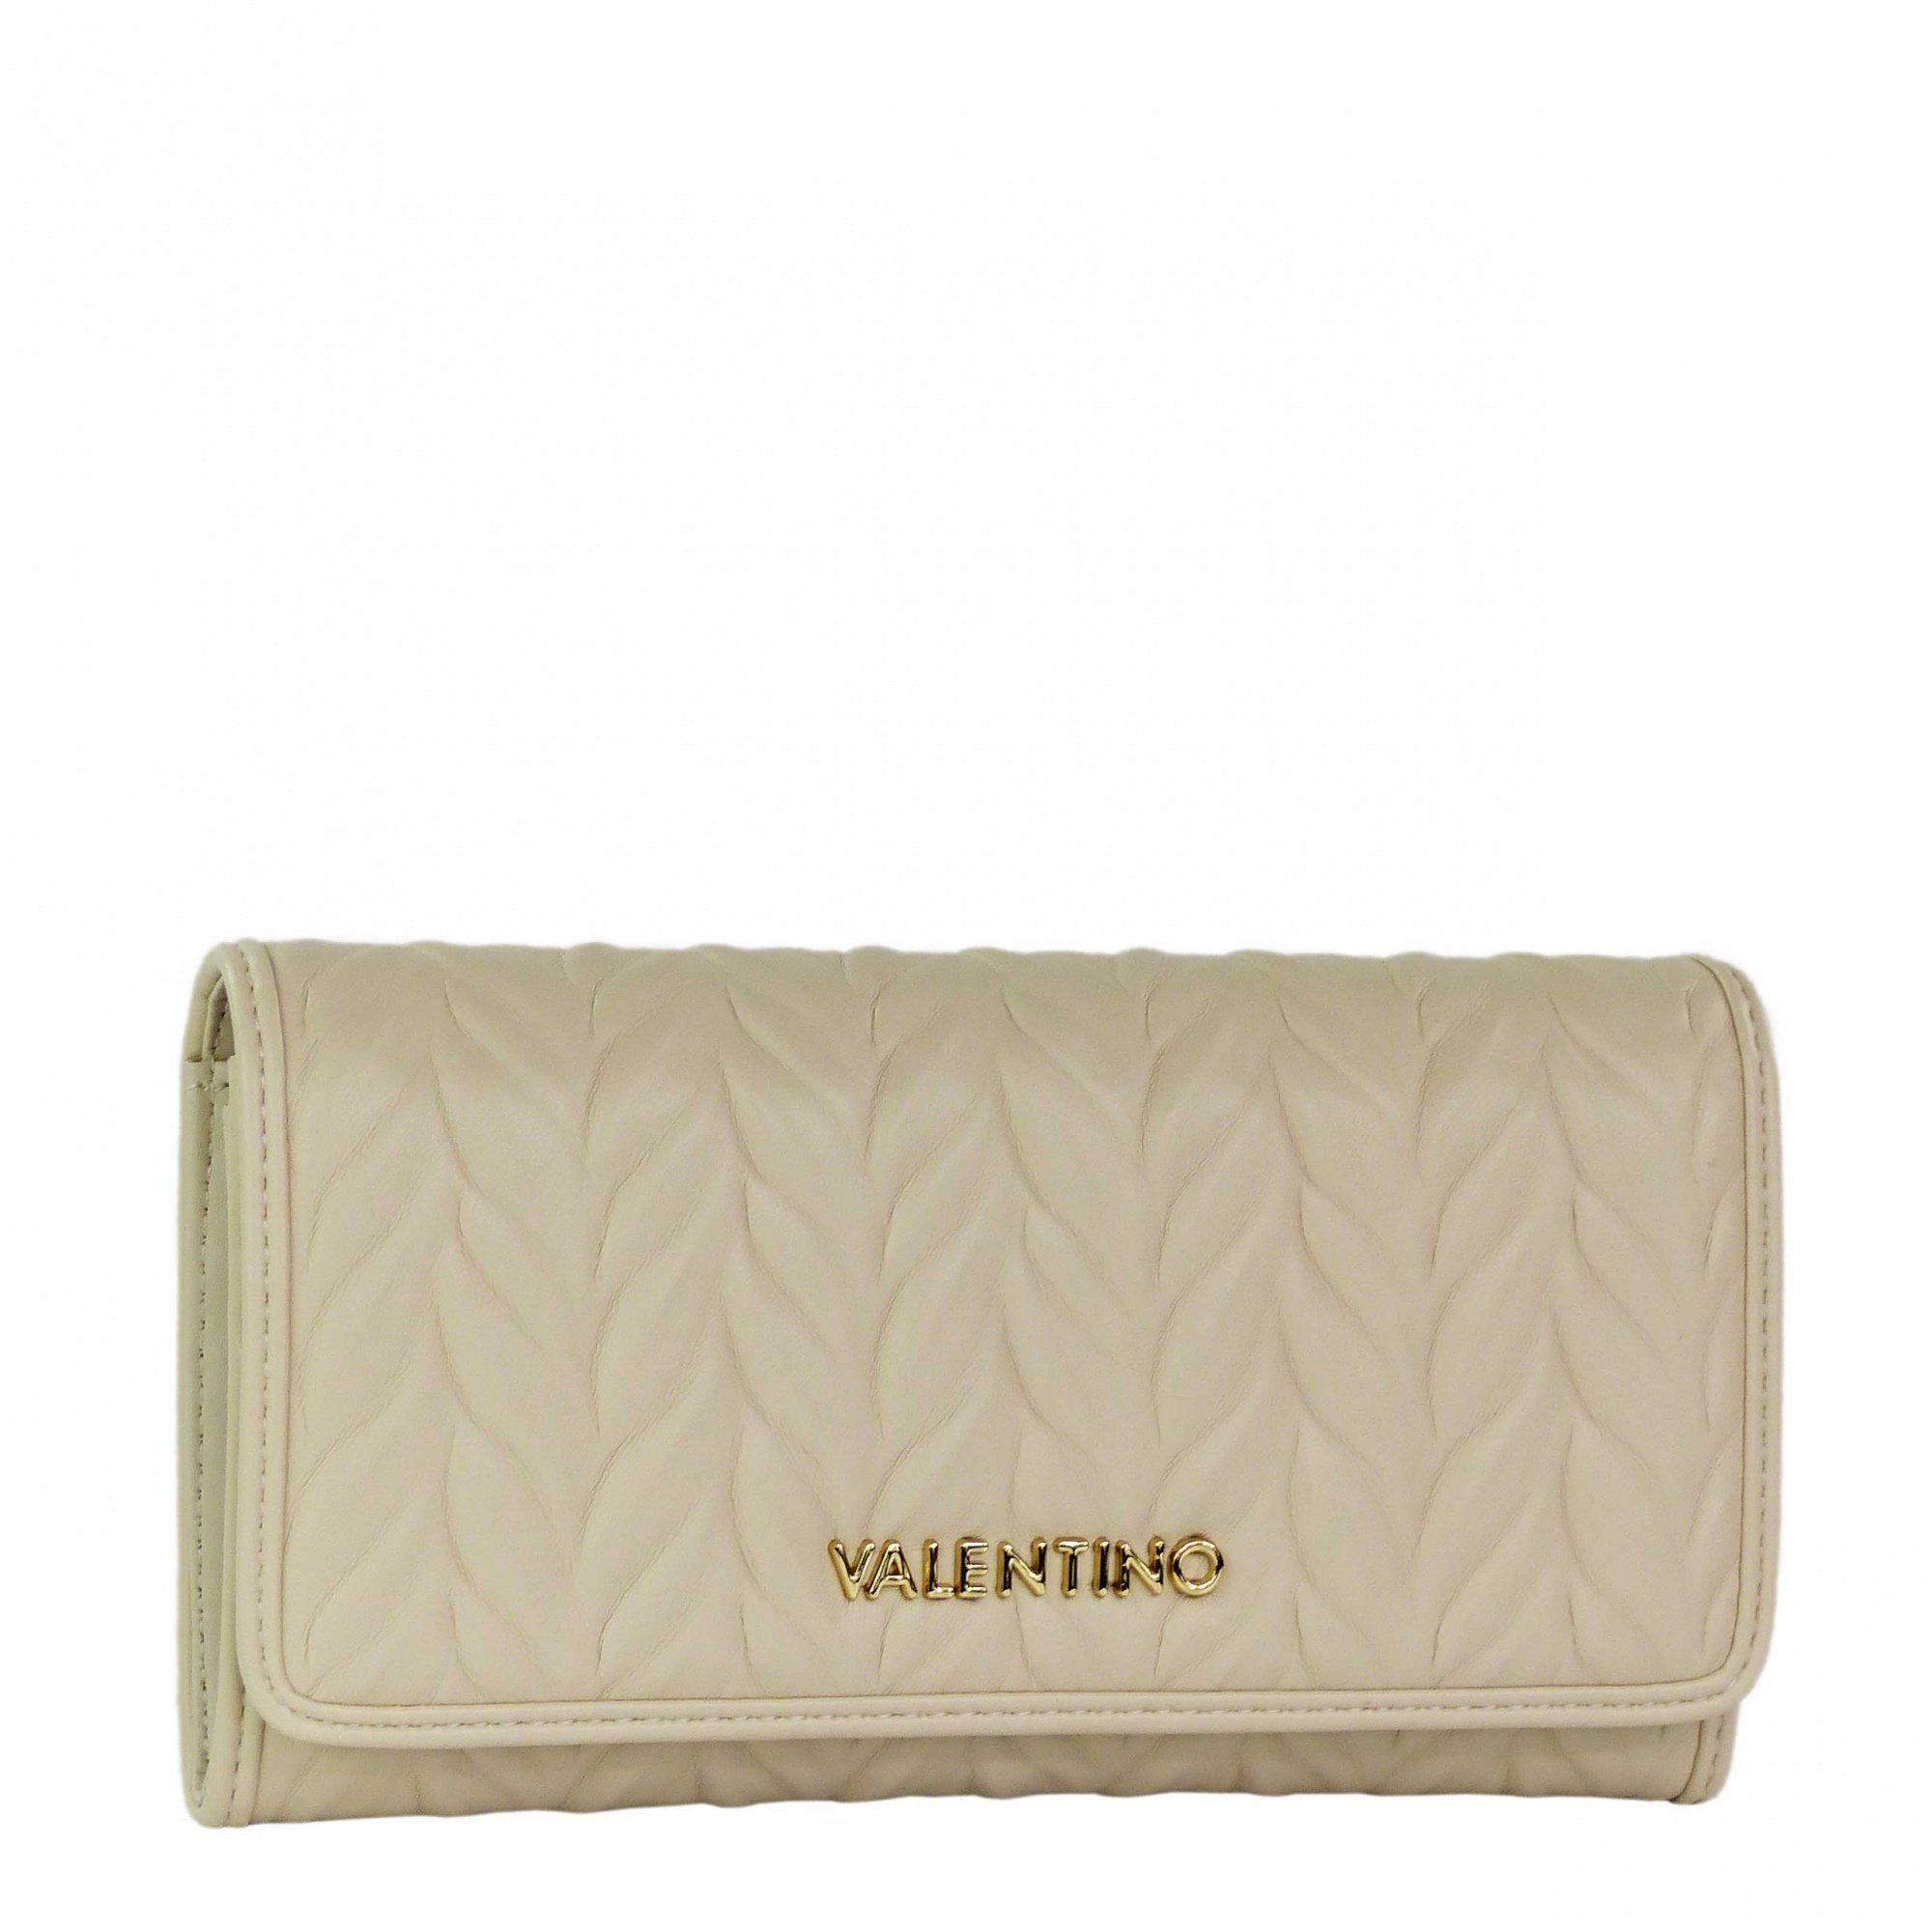 White VPS6TA113 BAGS VALENTINO Cream Re Sunny Geldbörse Wallet